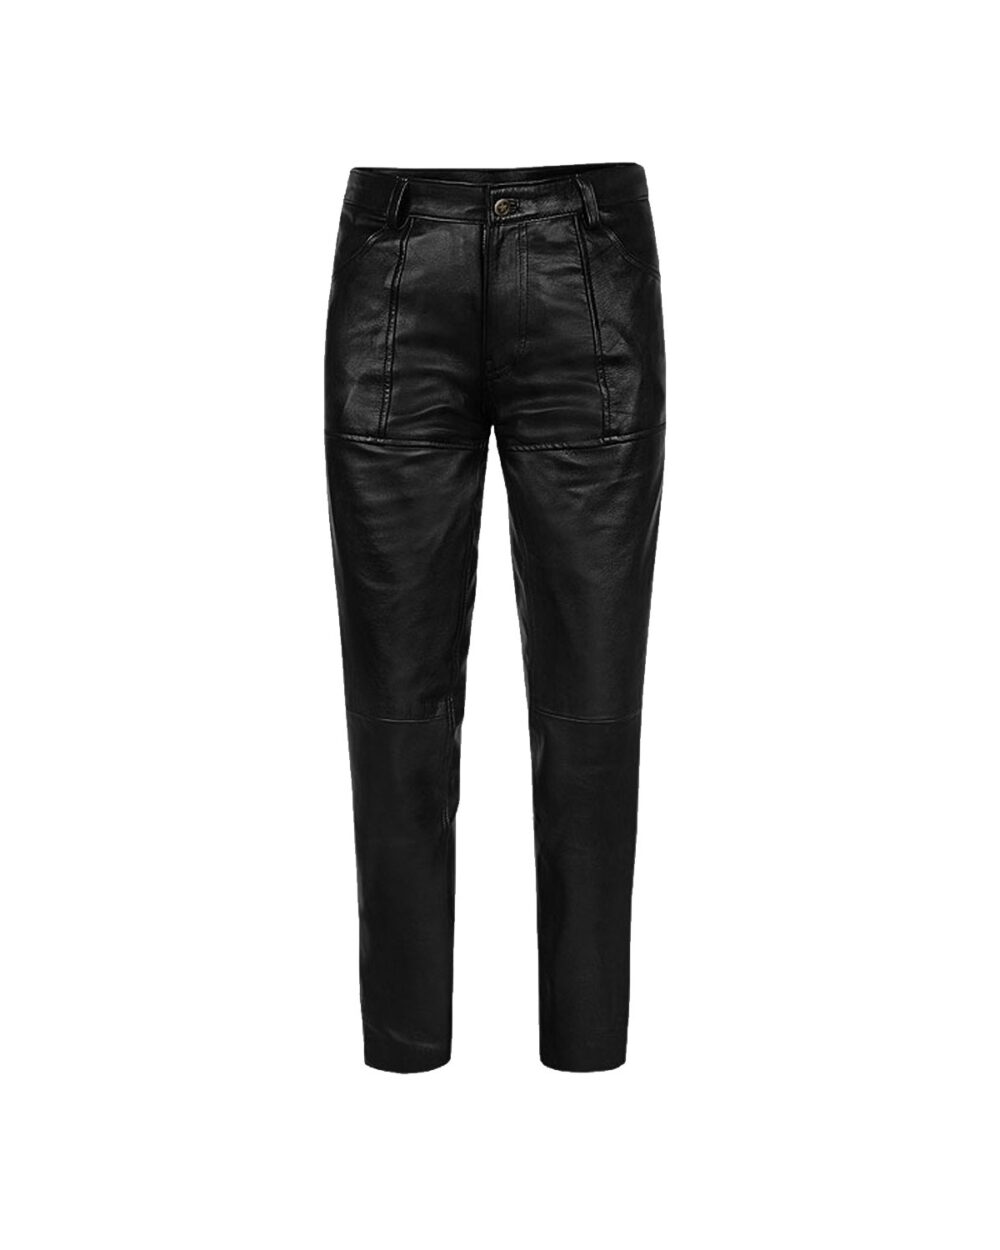 Shop Black Jim Morrison Leather Pants - Kmax Leather